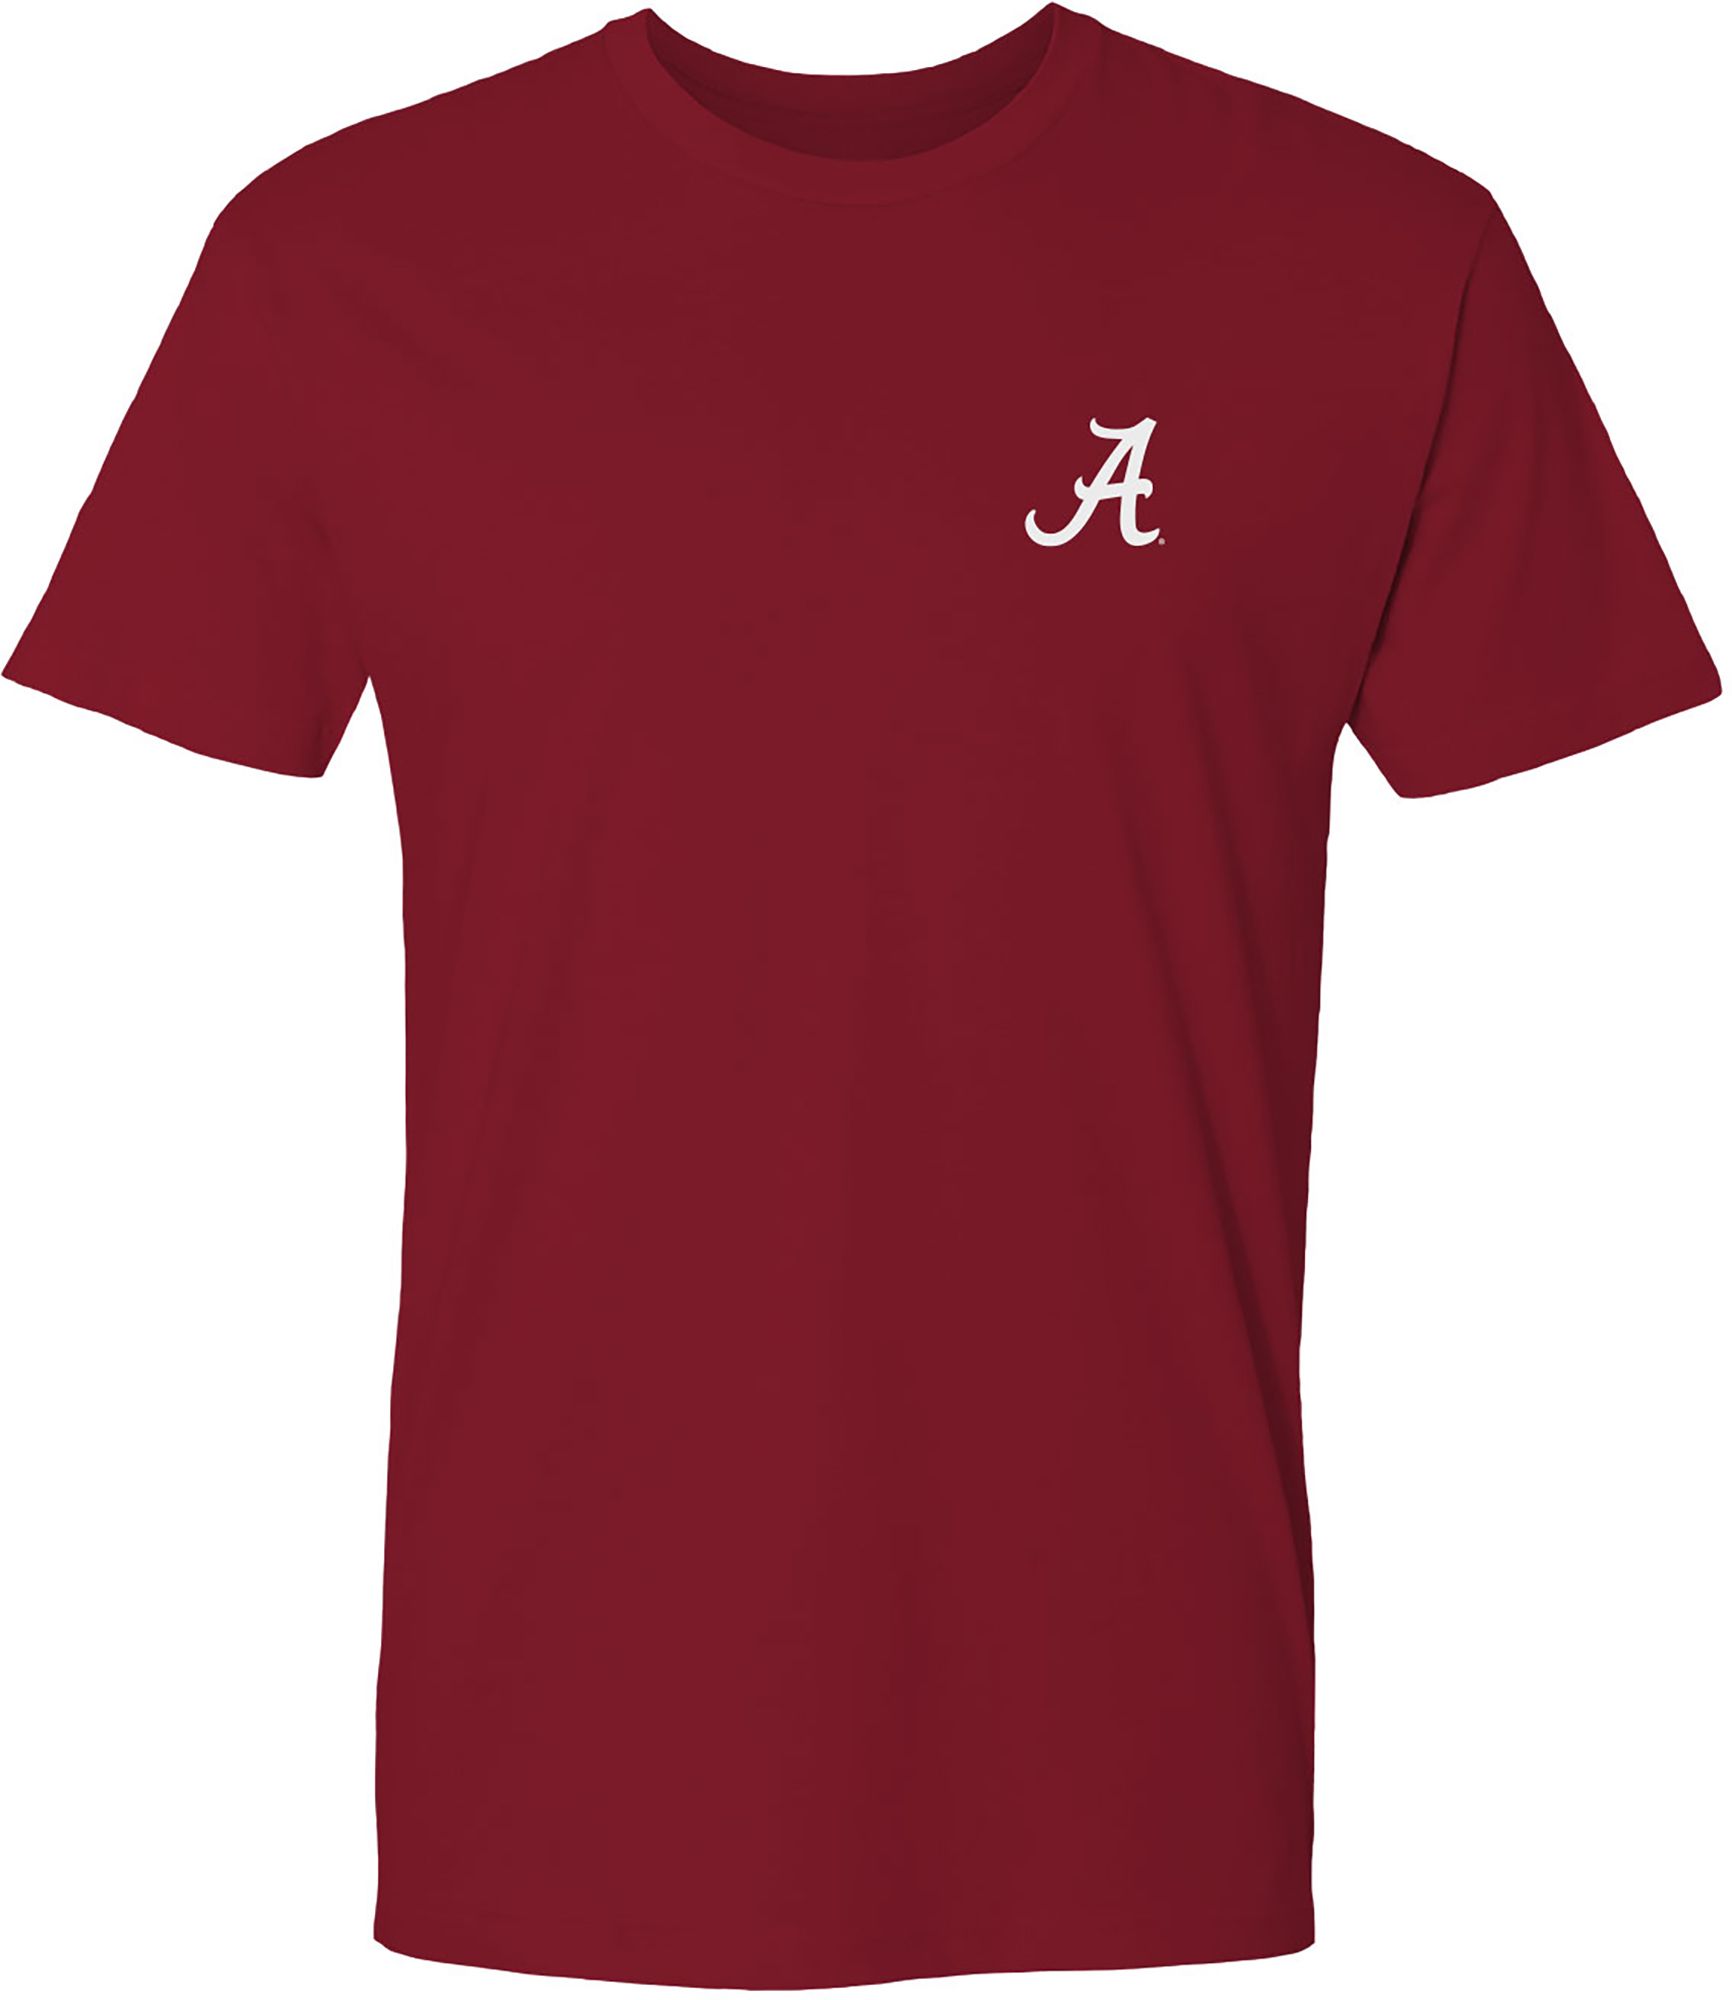 Great State Clothing Men's Alabama Crimson Tide Big Game T-Shirt